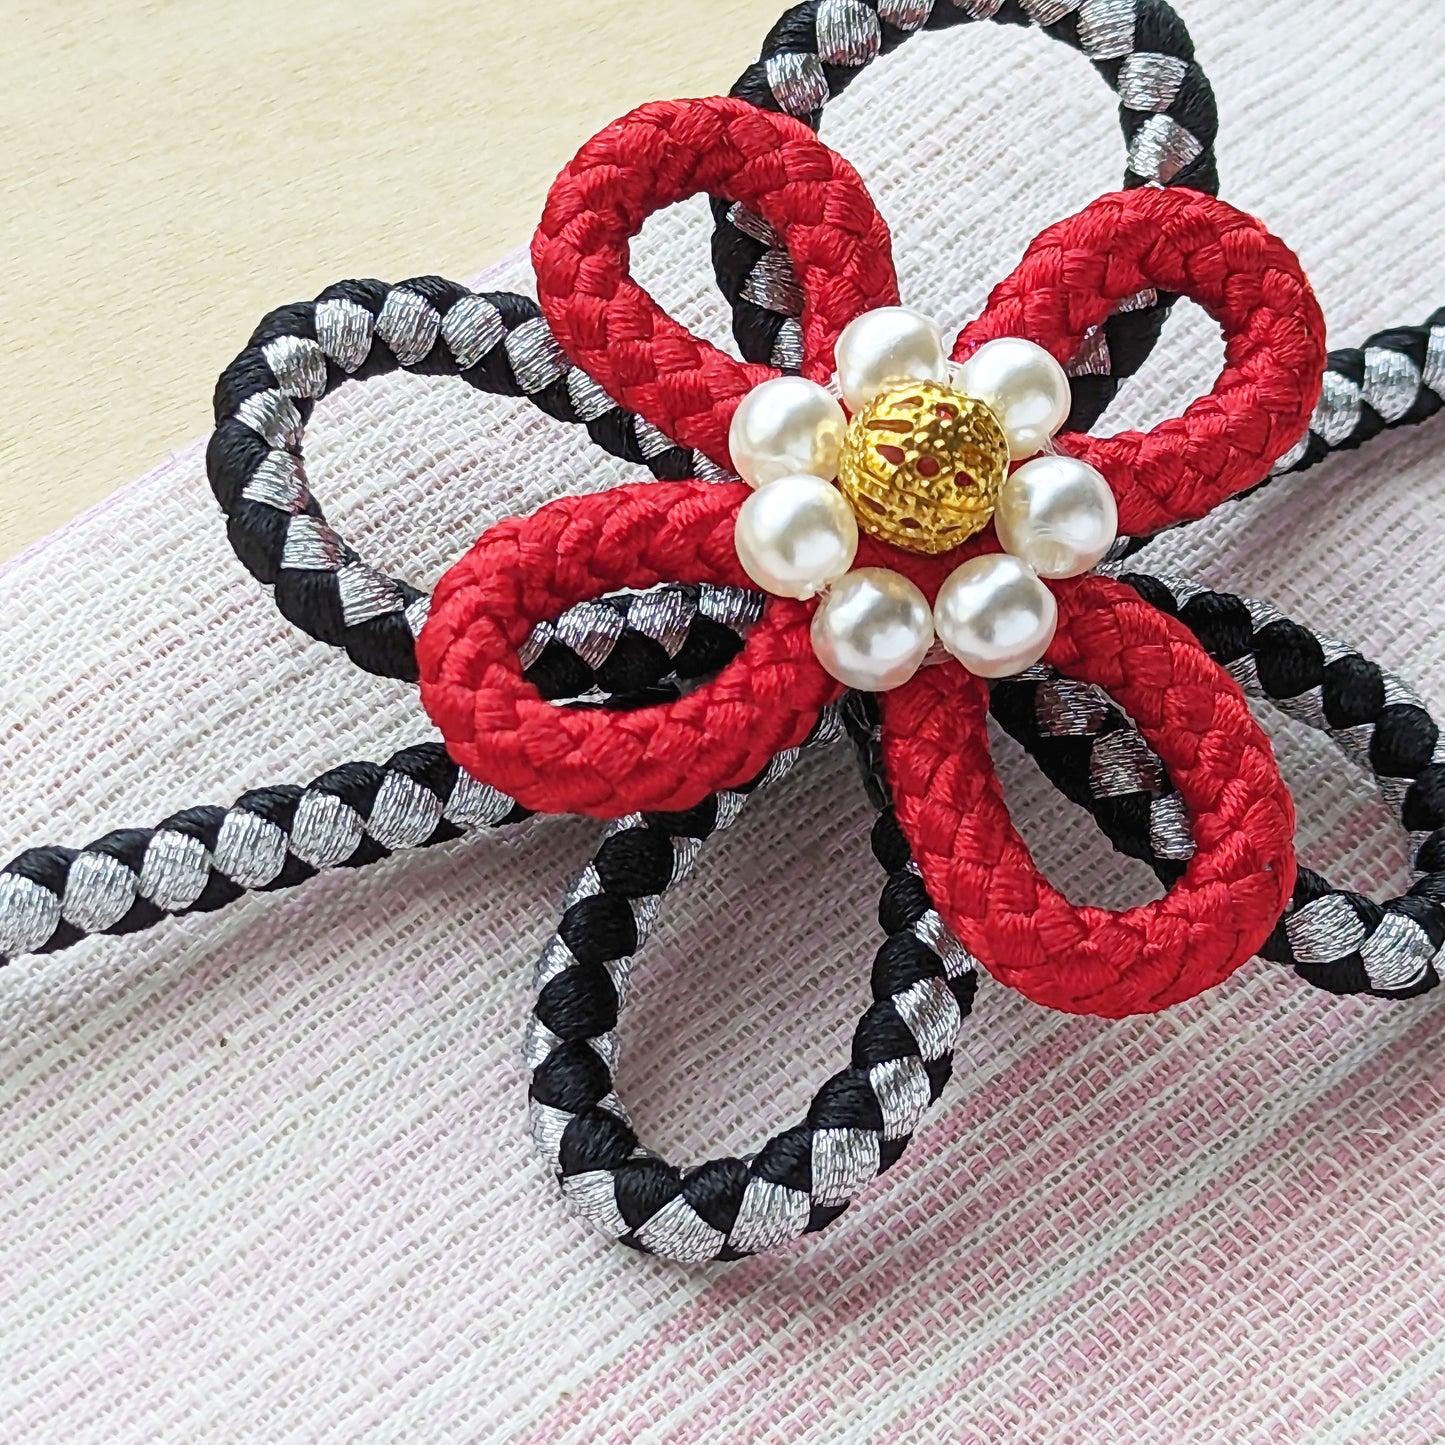 Japanese Kazari Himo Decorative String - Black/White/Red Flower Knot